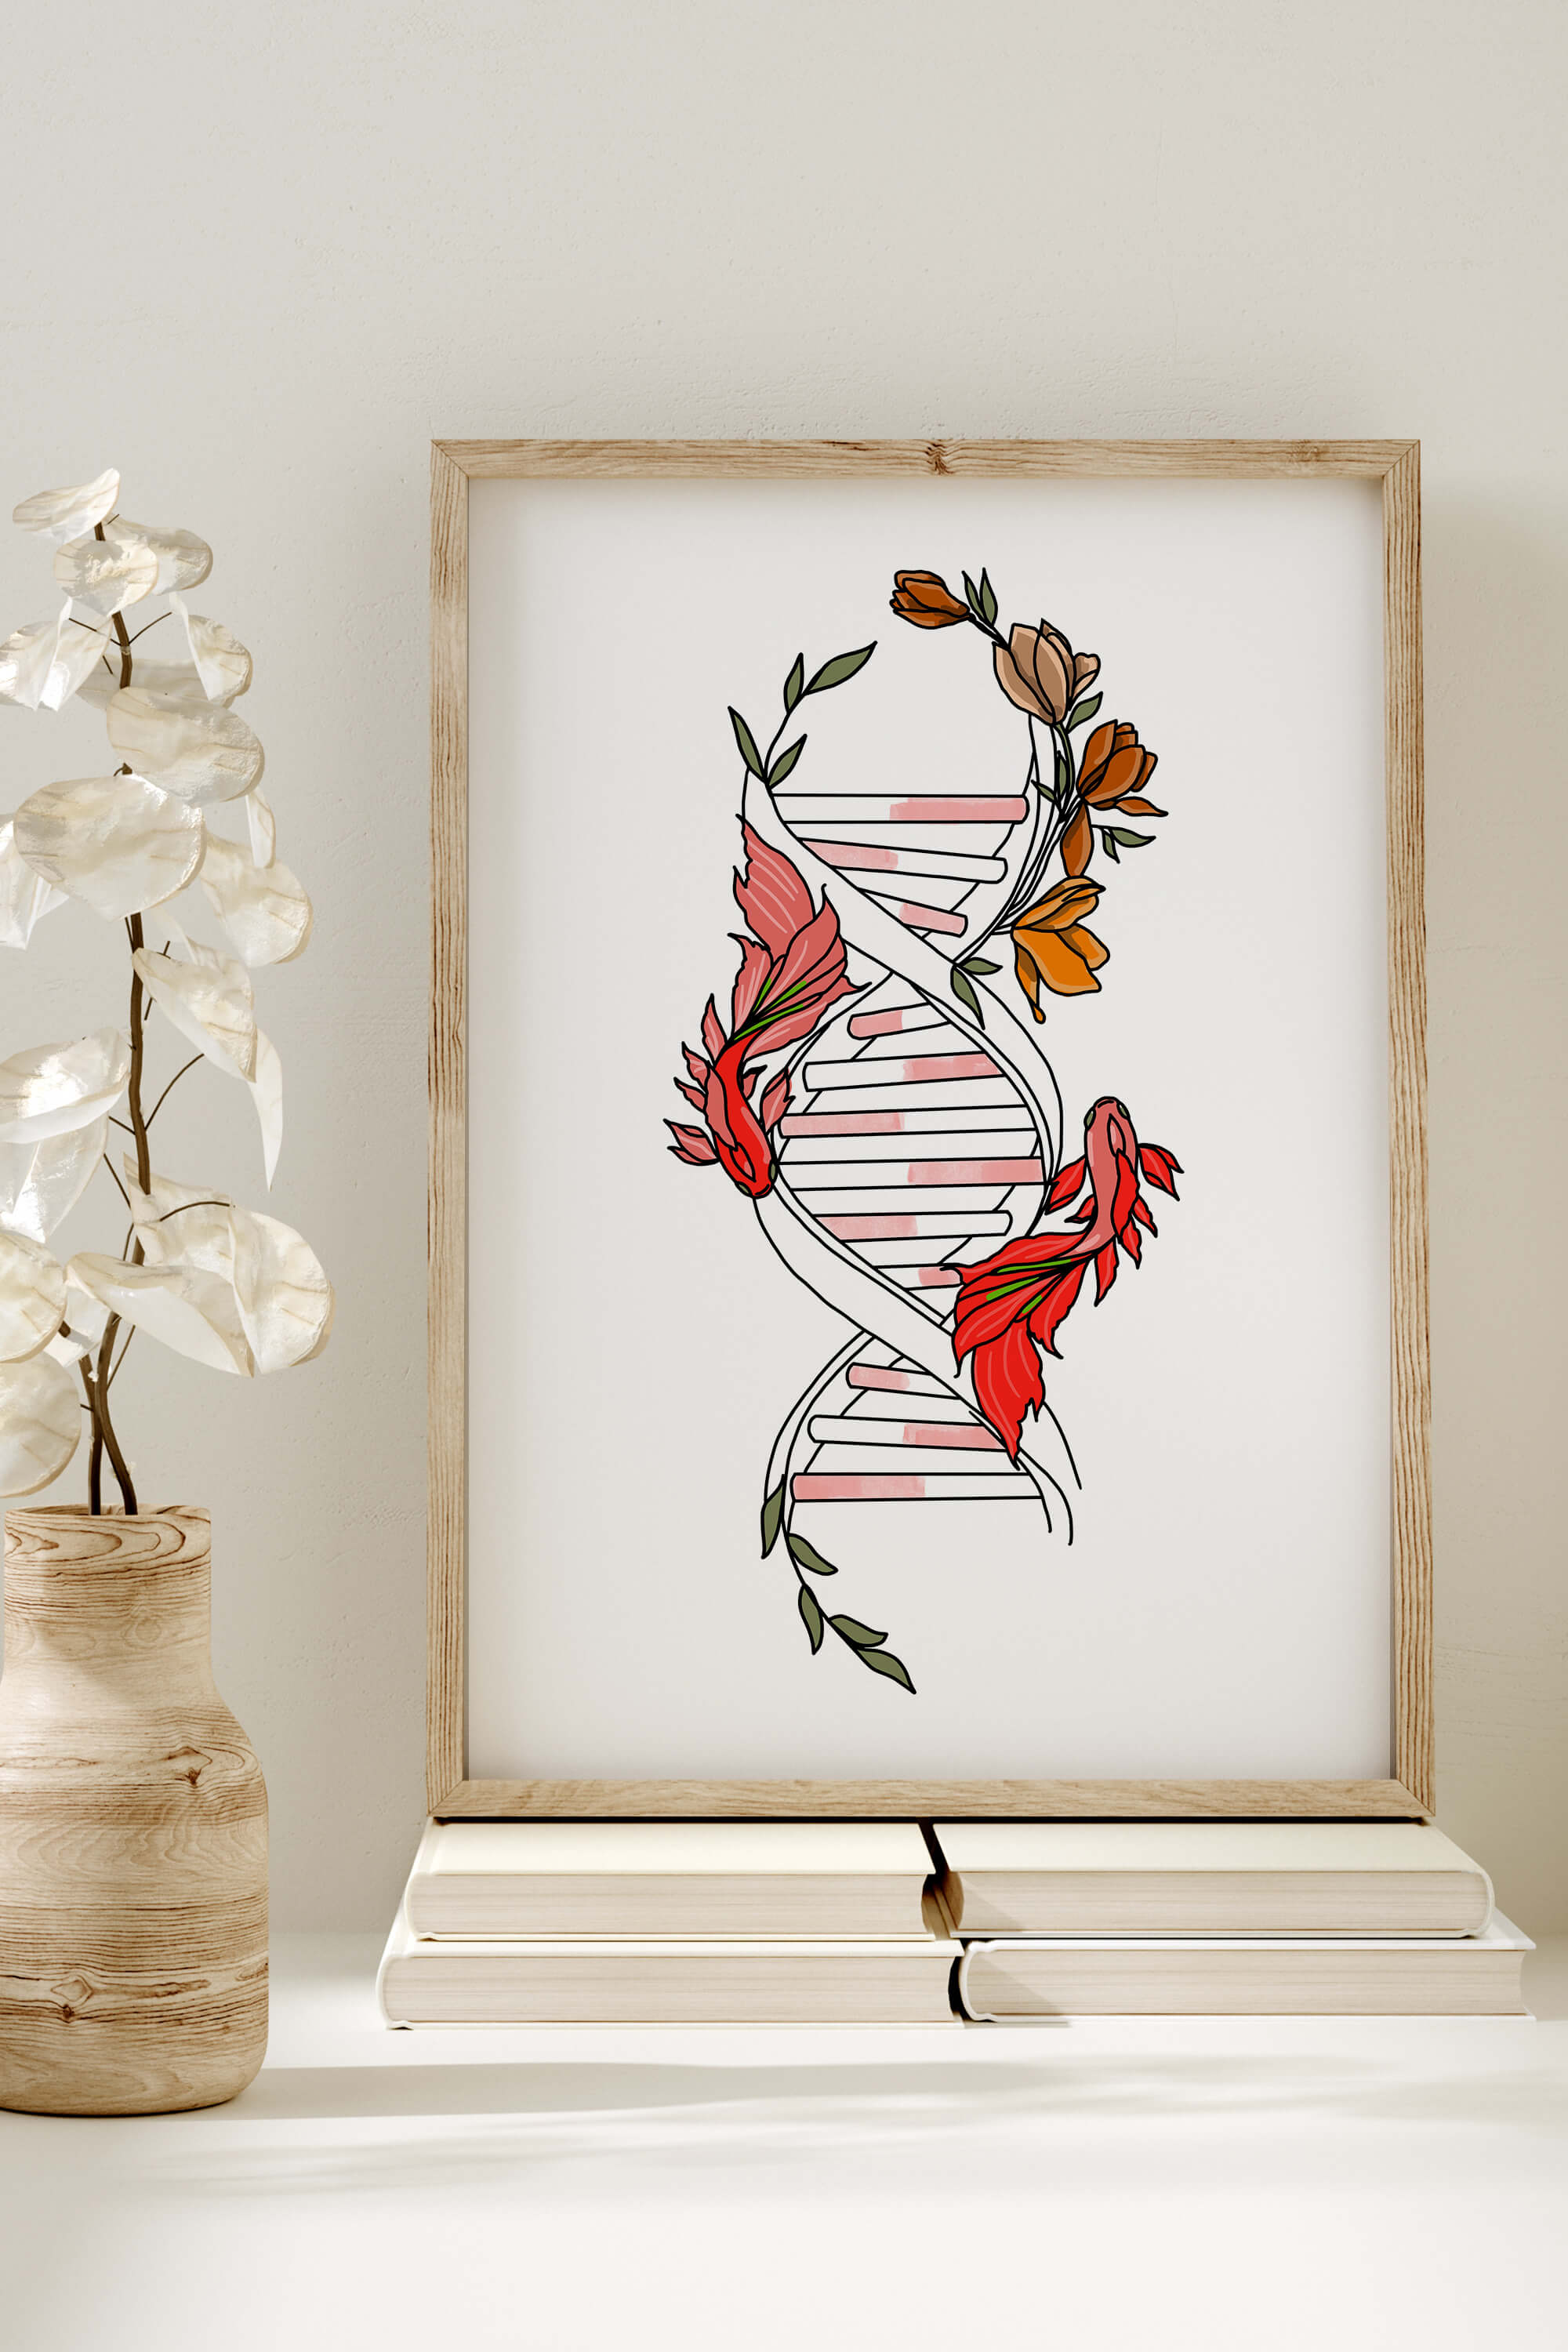 Botanical DNA Illustration, a vibrant and detailed artwork for enhancing biology classroom walls.